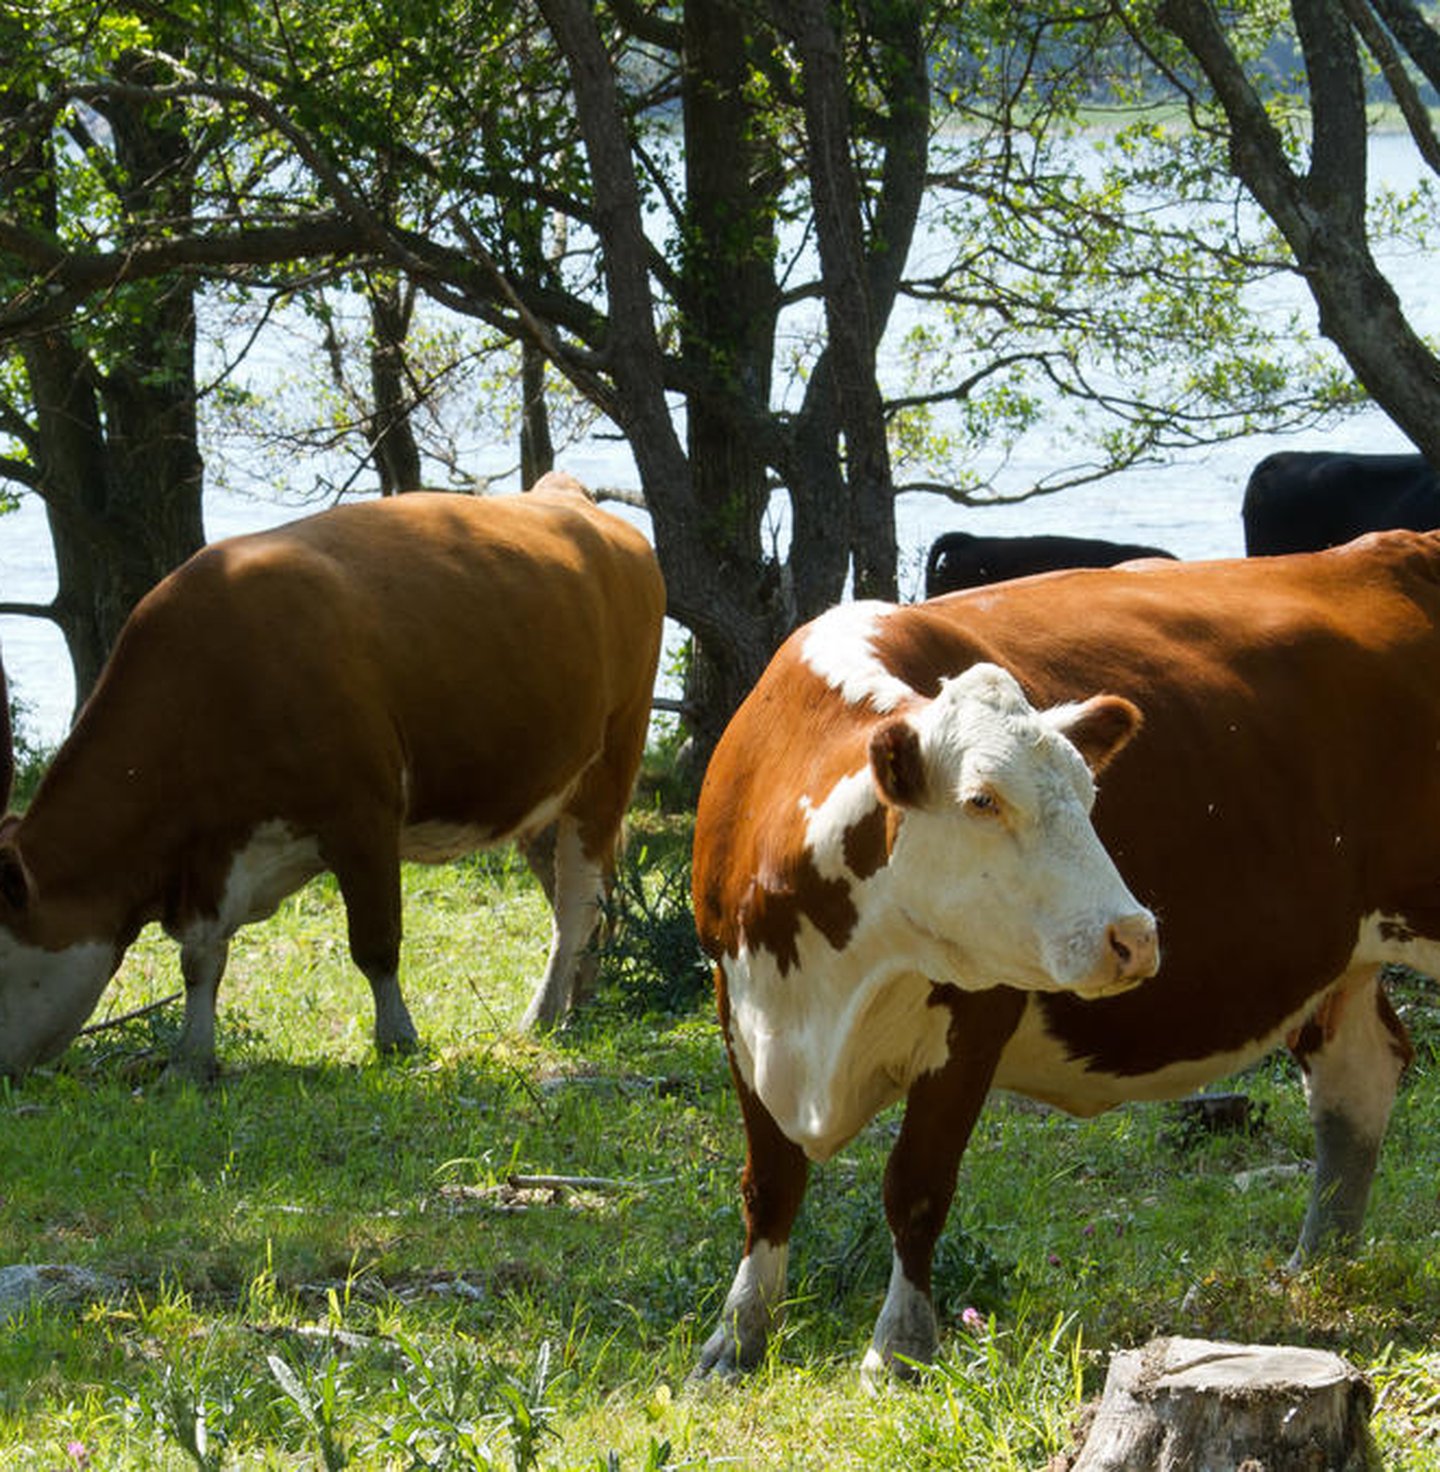 Cows (Bos taurus) grazing in Gryt archipelago, Sweden.